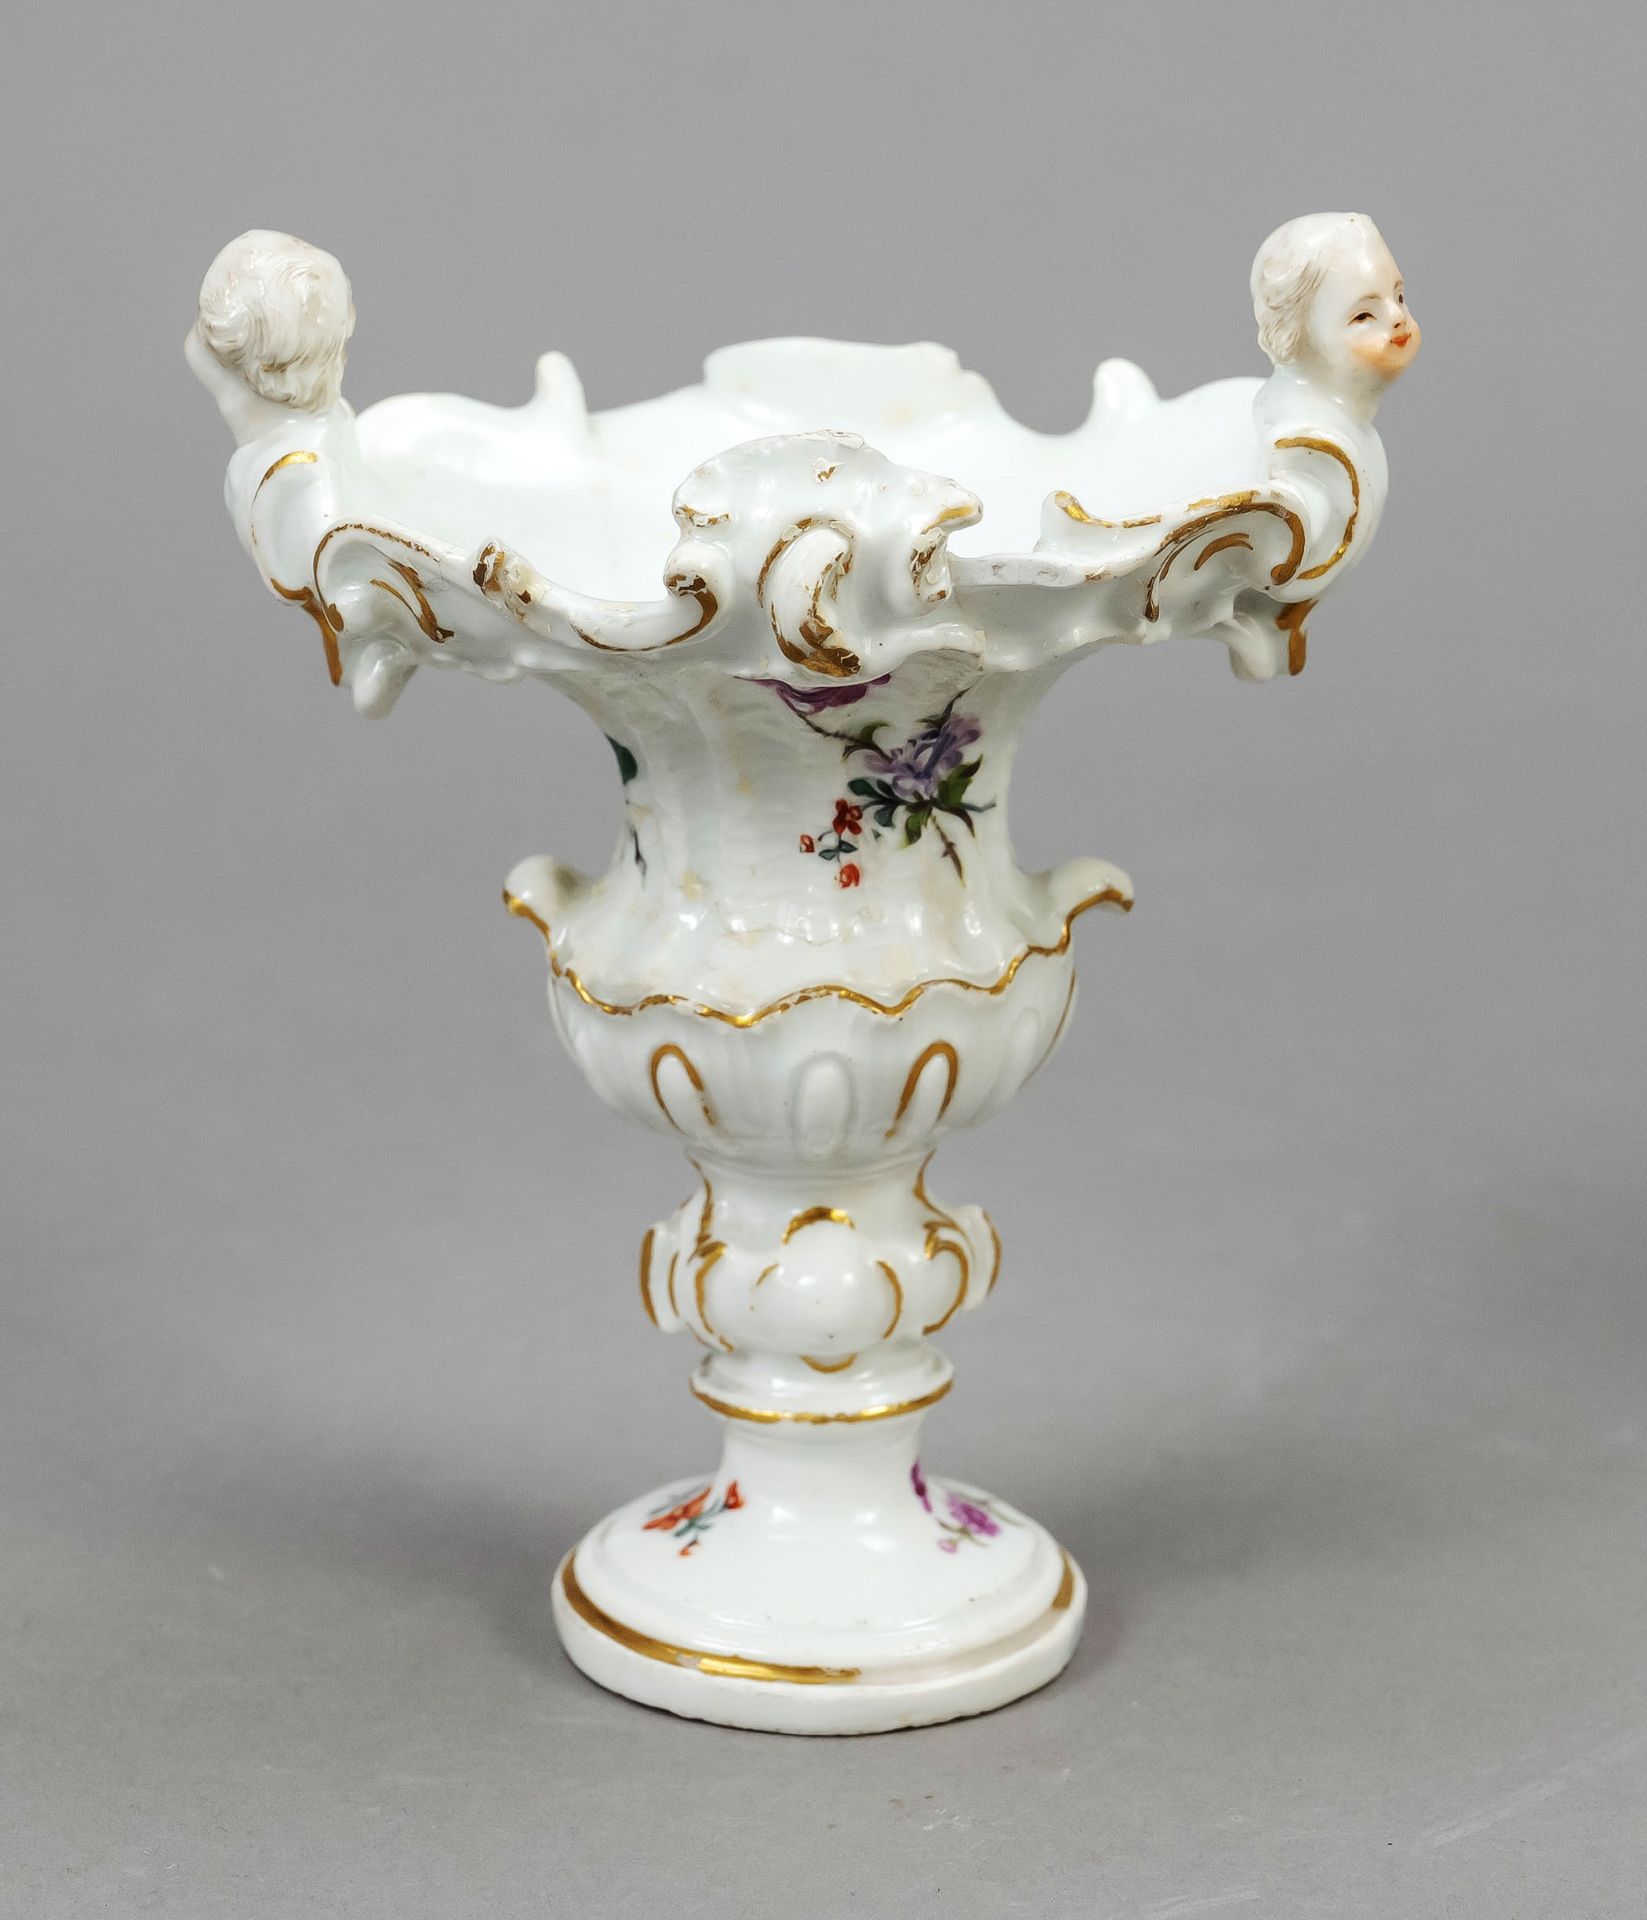 Baroque miniature vase, w. Meissen, 18th century, so called orange cup, urn shape with relief